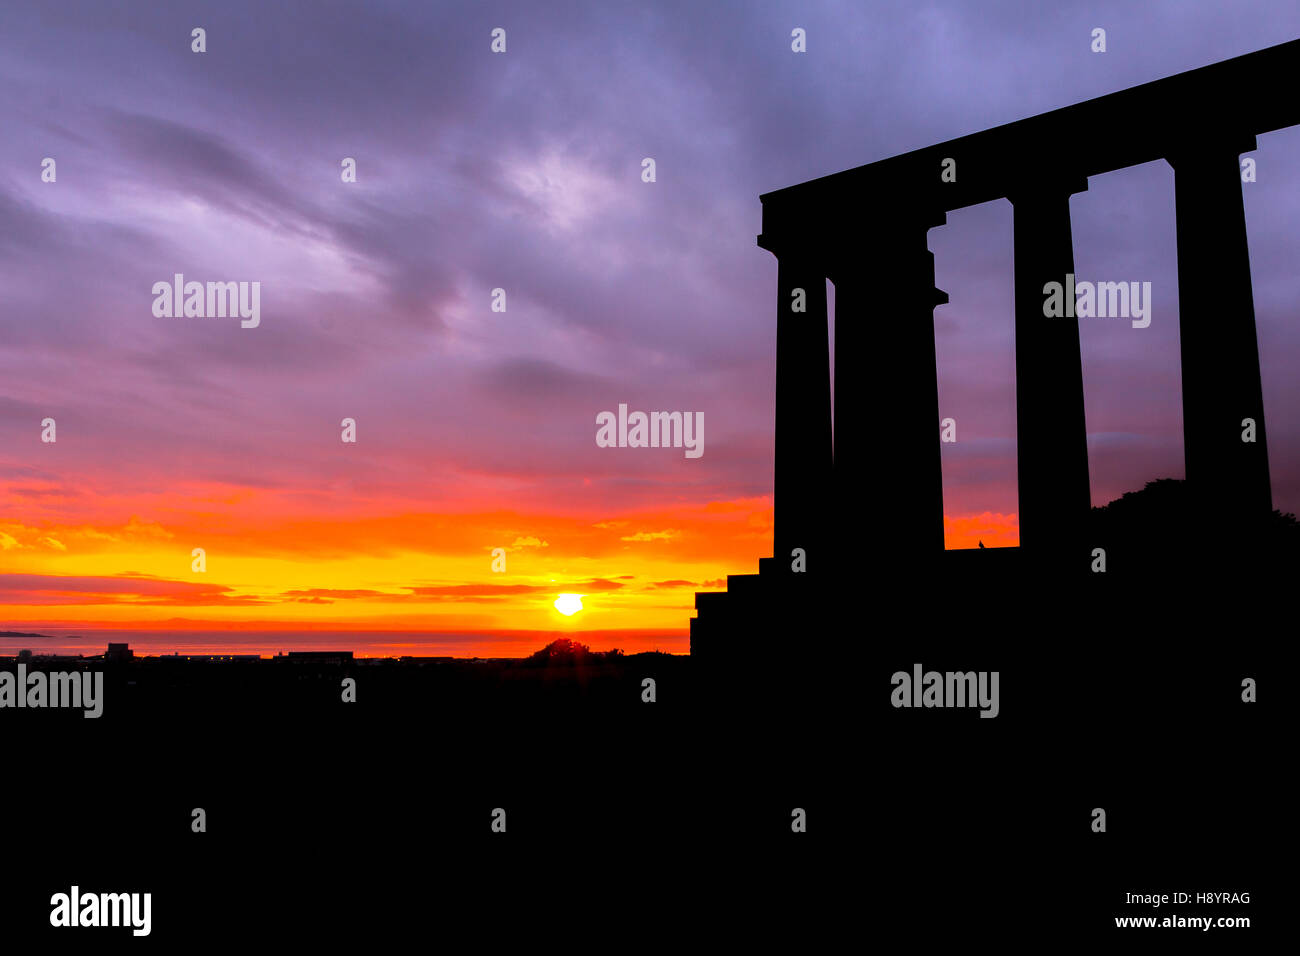 Pillars of National Monument, Edinburgh, Scotland, United Kingdom at Sunrise Stock Photo